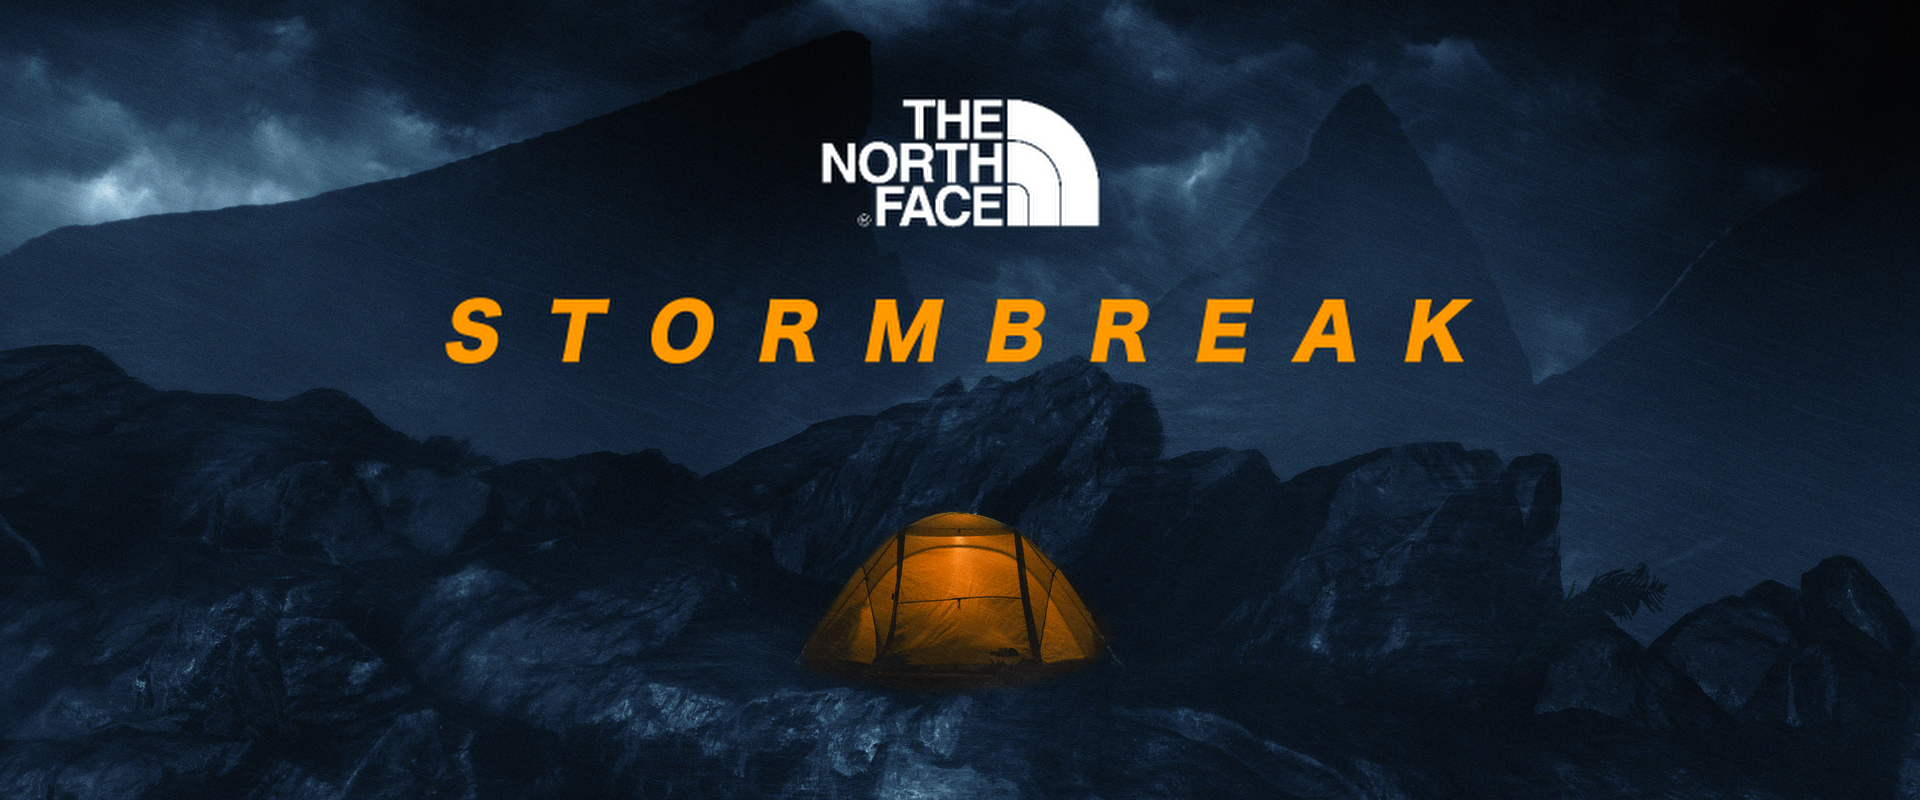 The North Face - Stormbreak